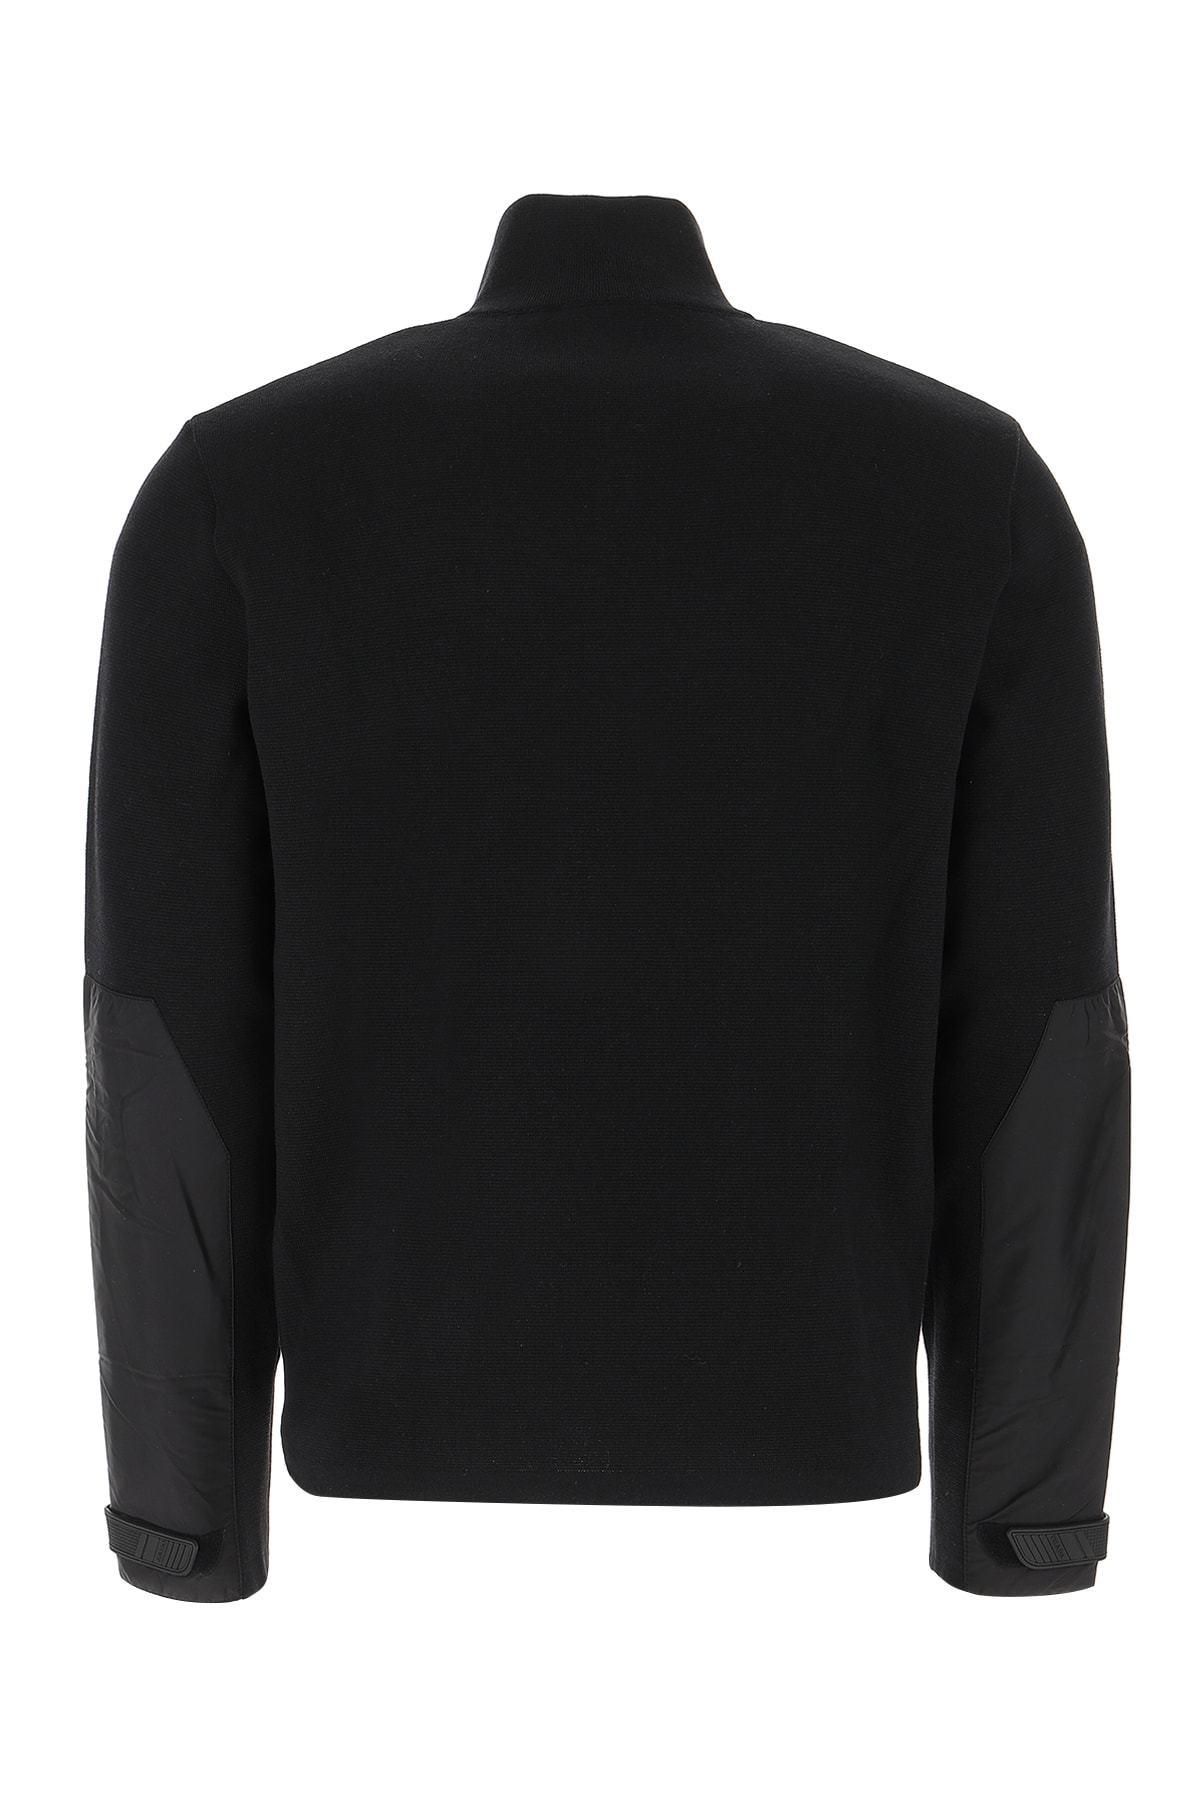 Prada Synthetic Zipped Cardigan in Black for Men - Lyst